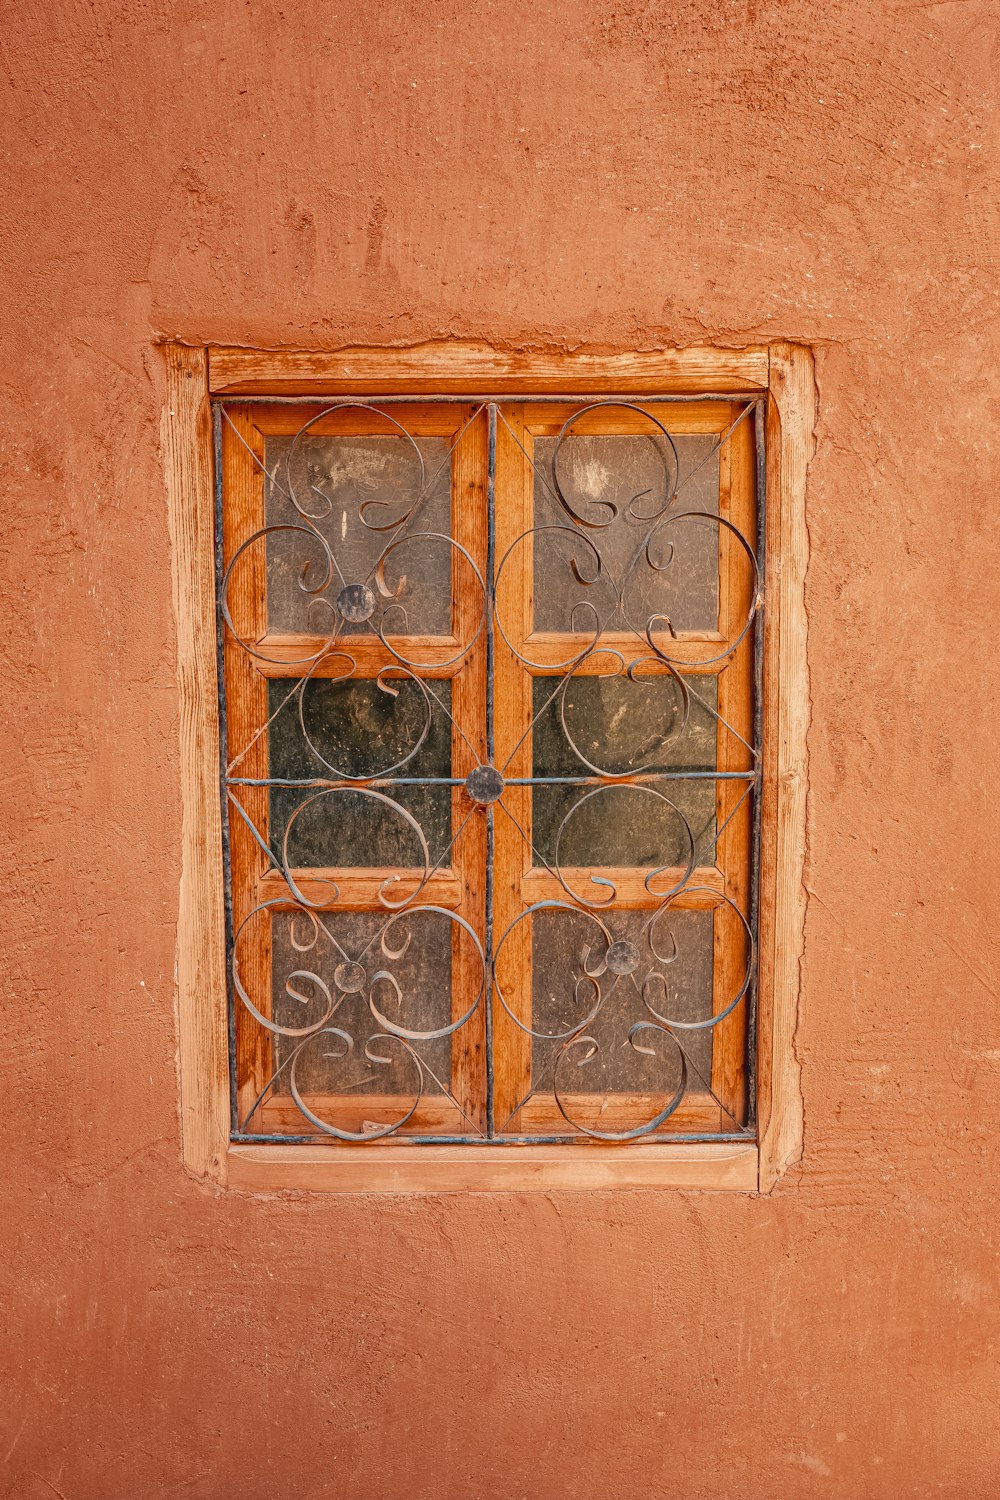 a window with iron bars on a stucco wall